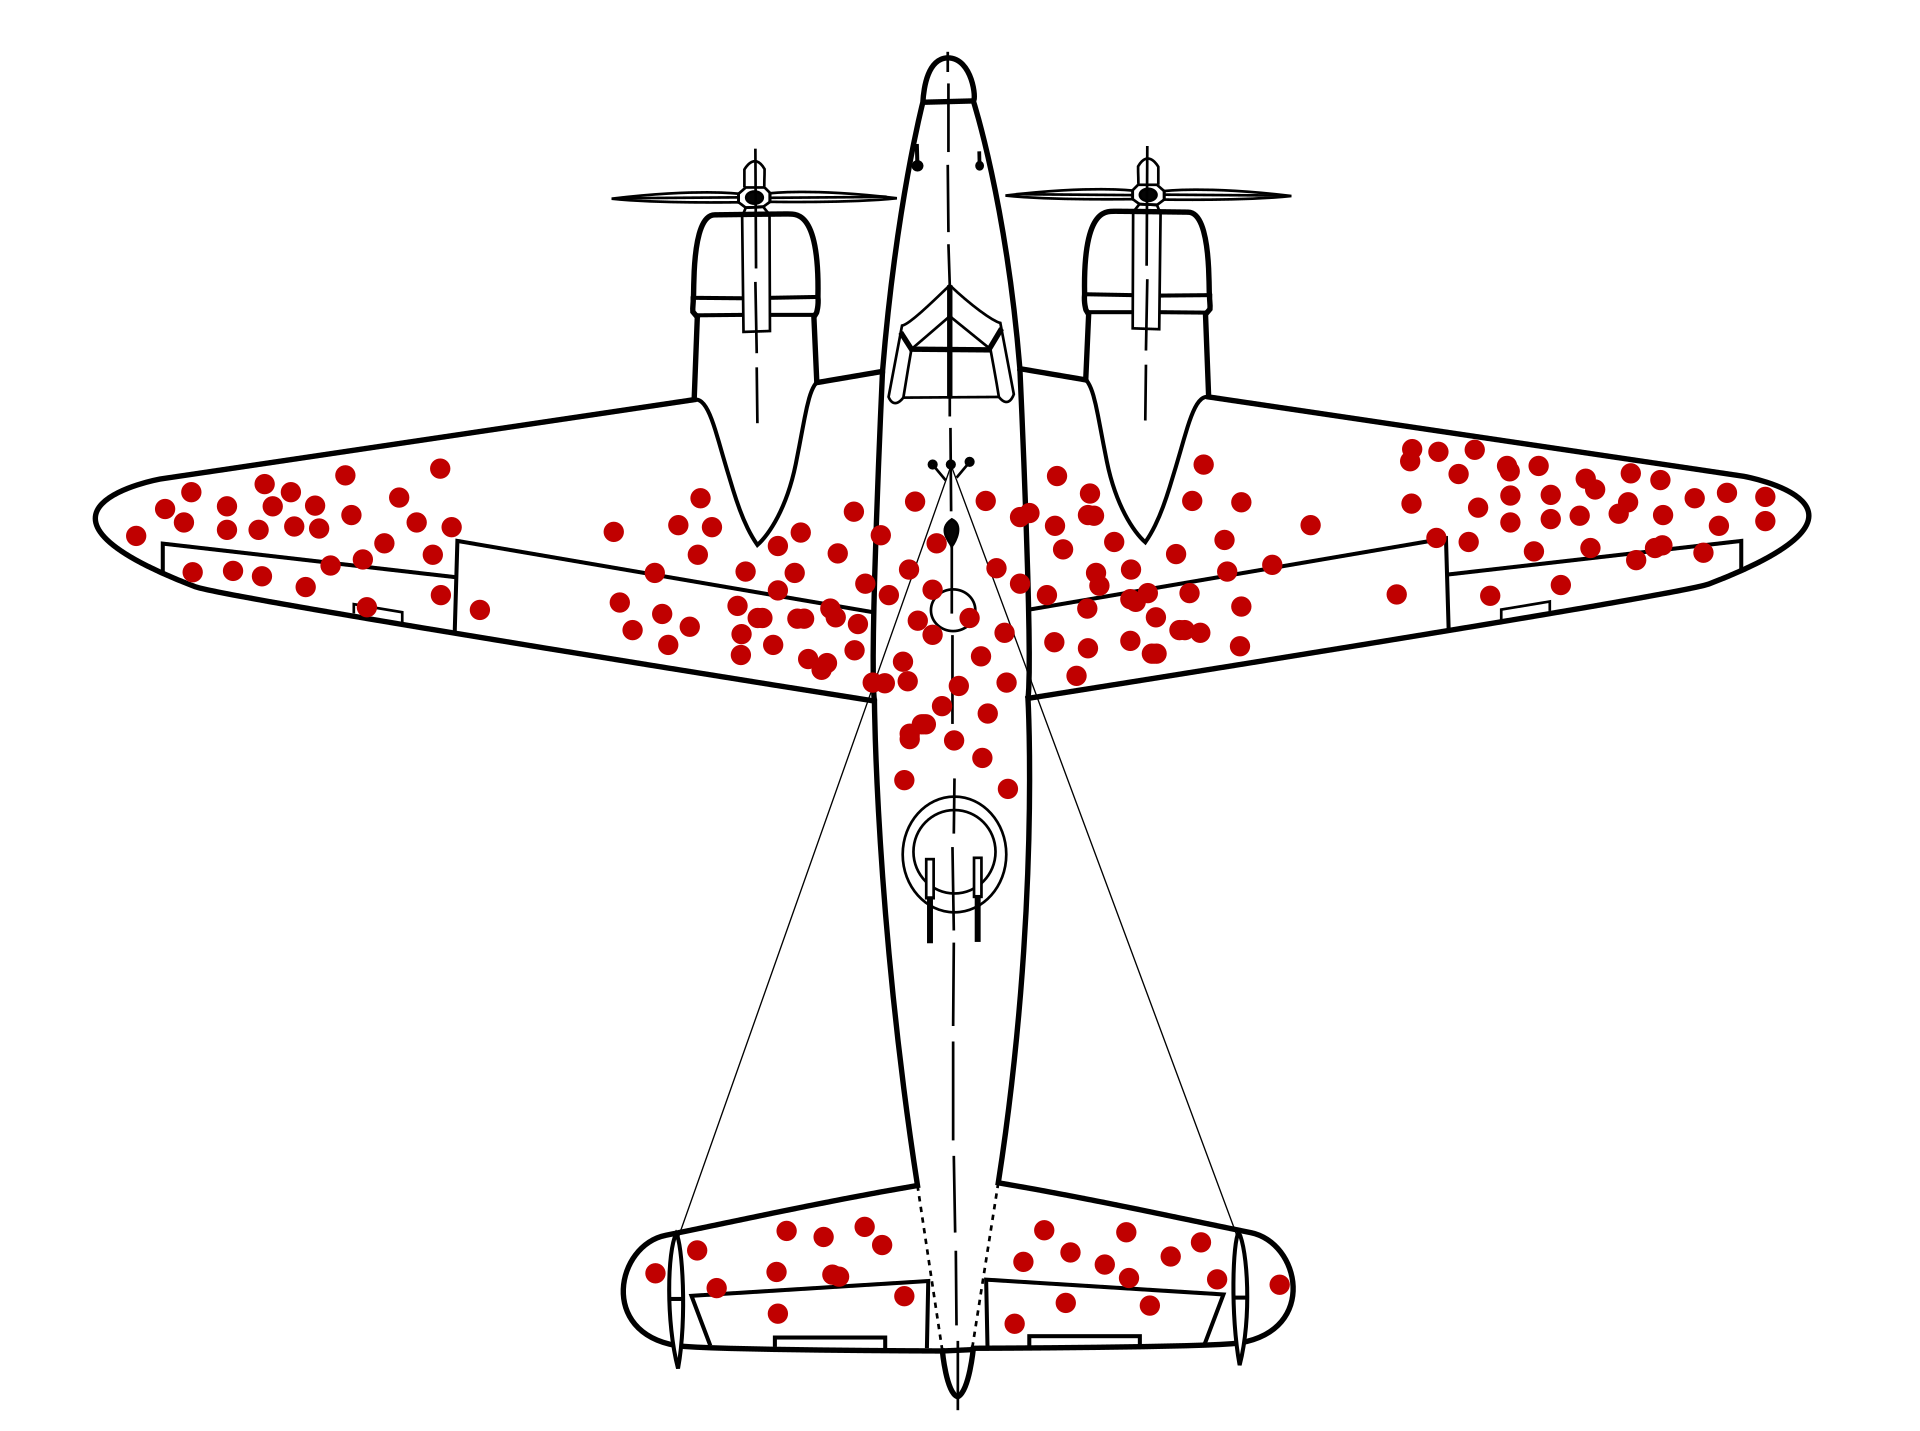 image of returning airplane showing bullet holes